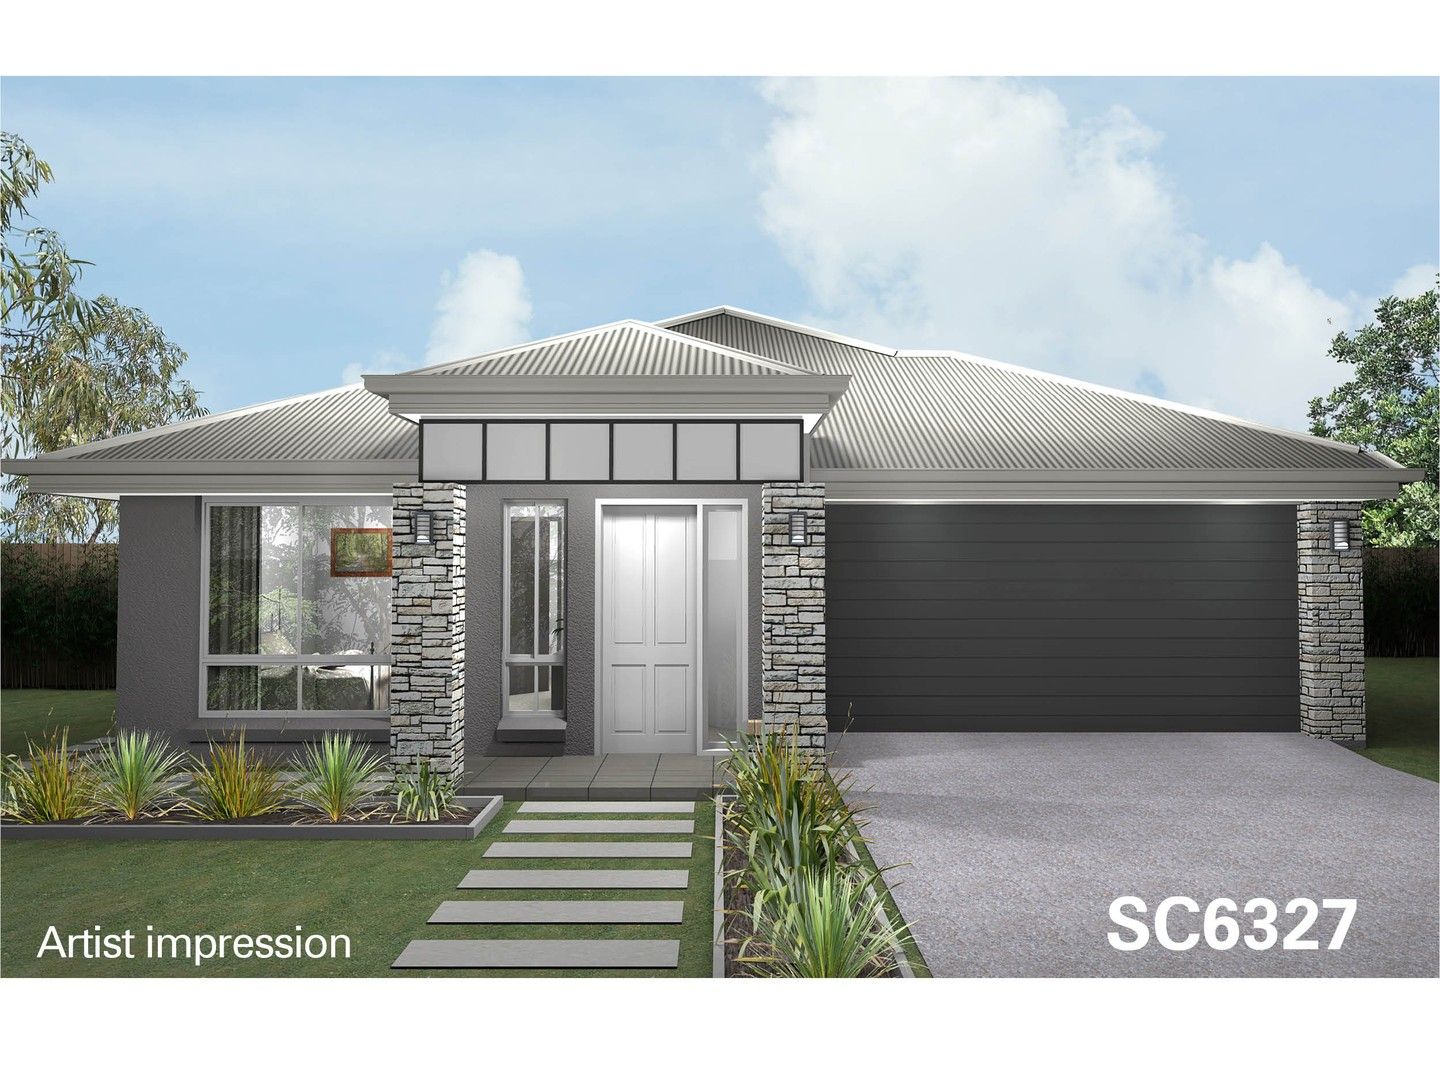 4 bedrooms New House & Land in 13 Pitt St MAUDSLAND QLD, 4210